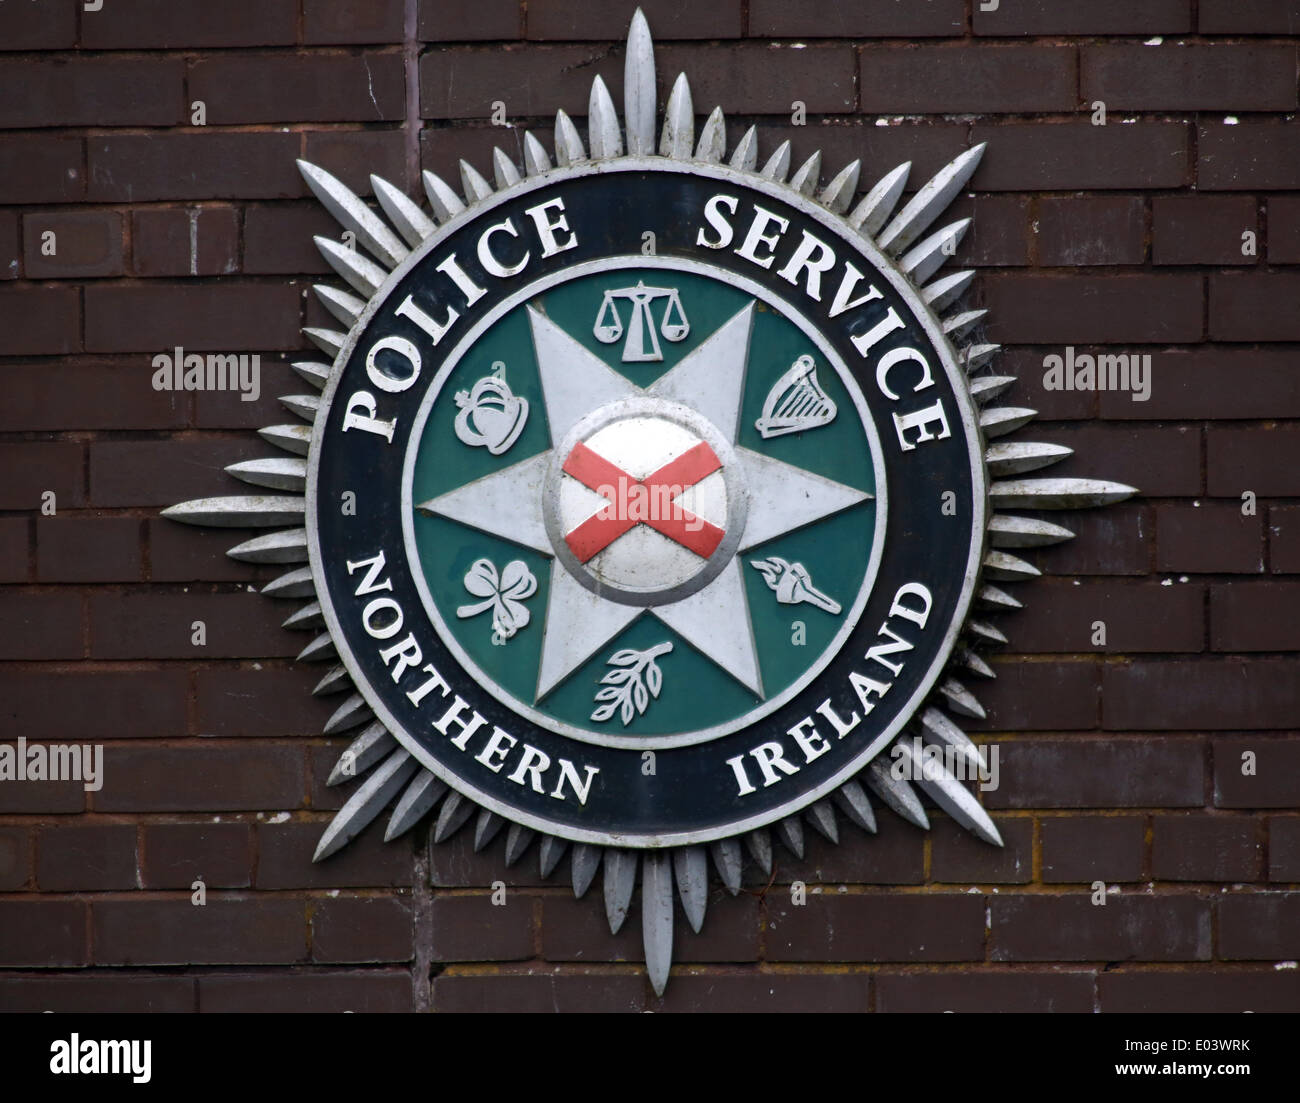 Antrim, Northern Ireland, UK. 1st May 2014. PSNI (Police Service of Northern Ireland) Antrim police station in Antrim, Northern Stock Photo